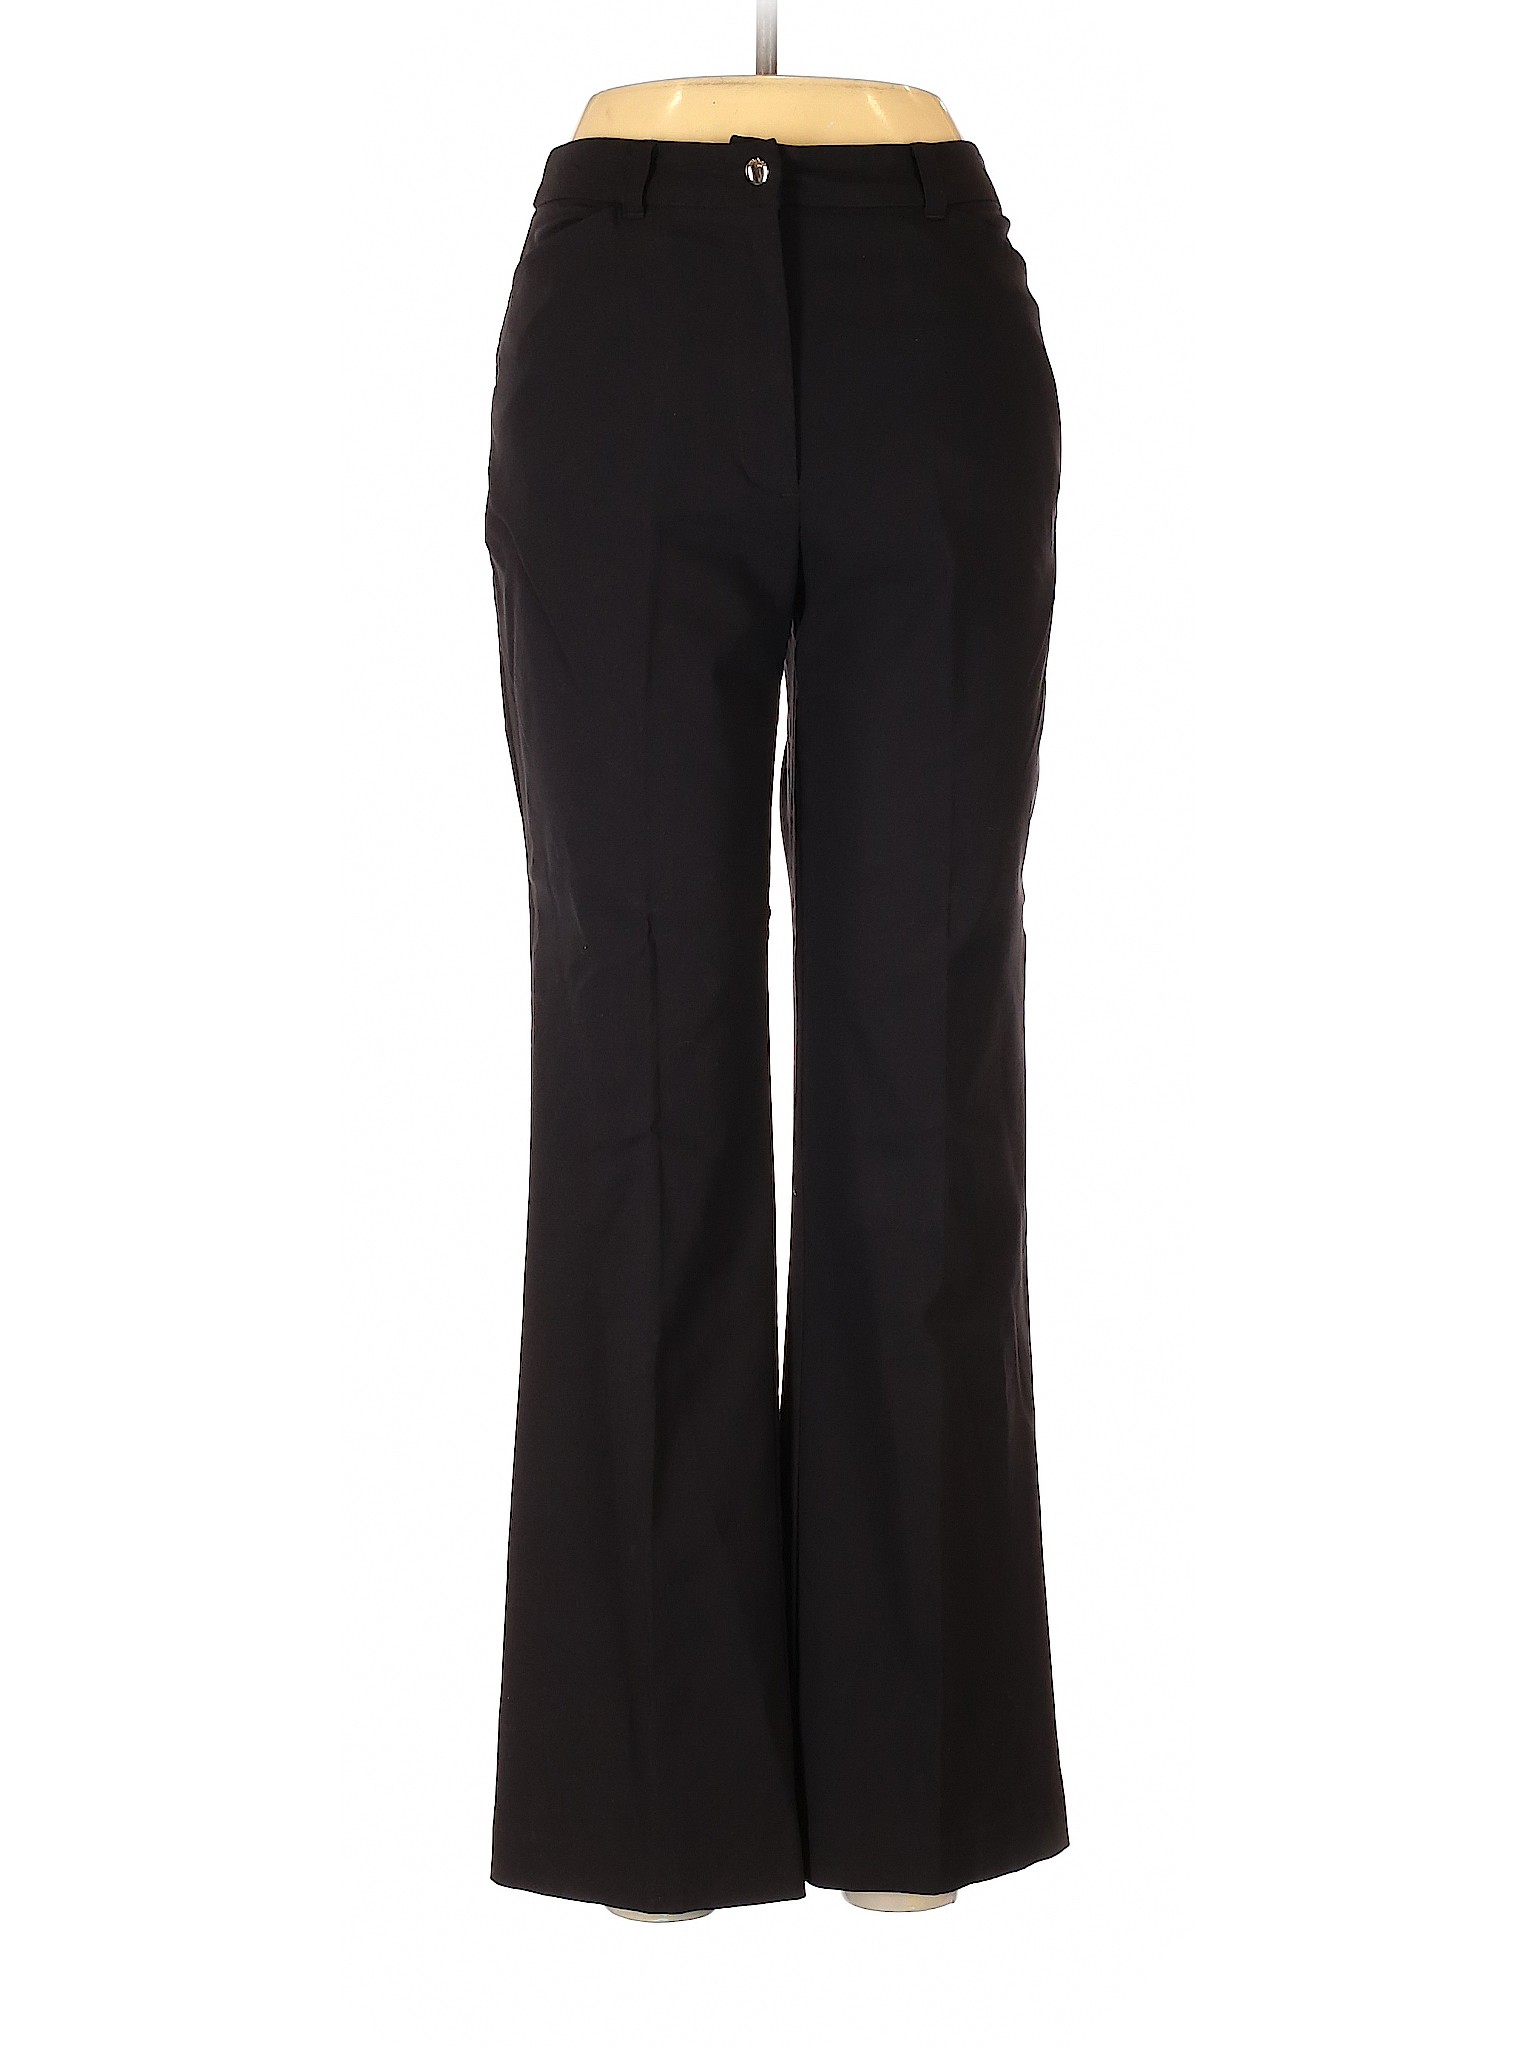 Metro Style Women Black Casual Pants 6 | eBay